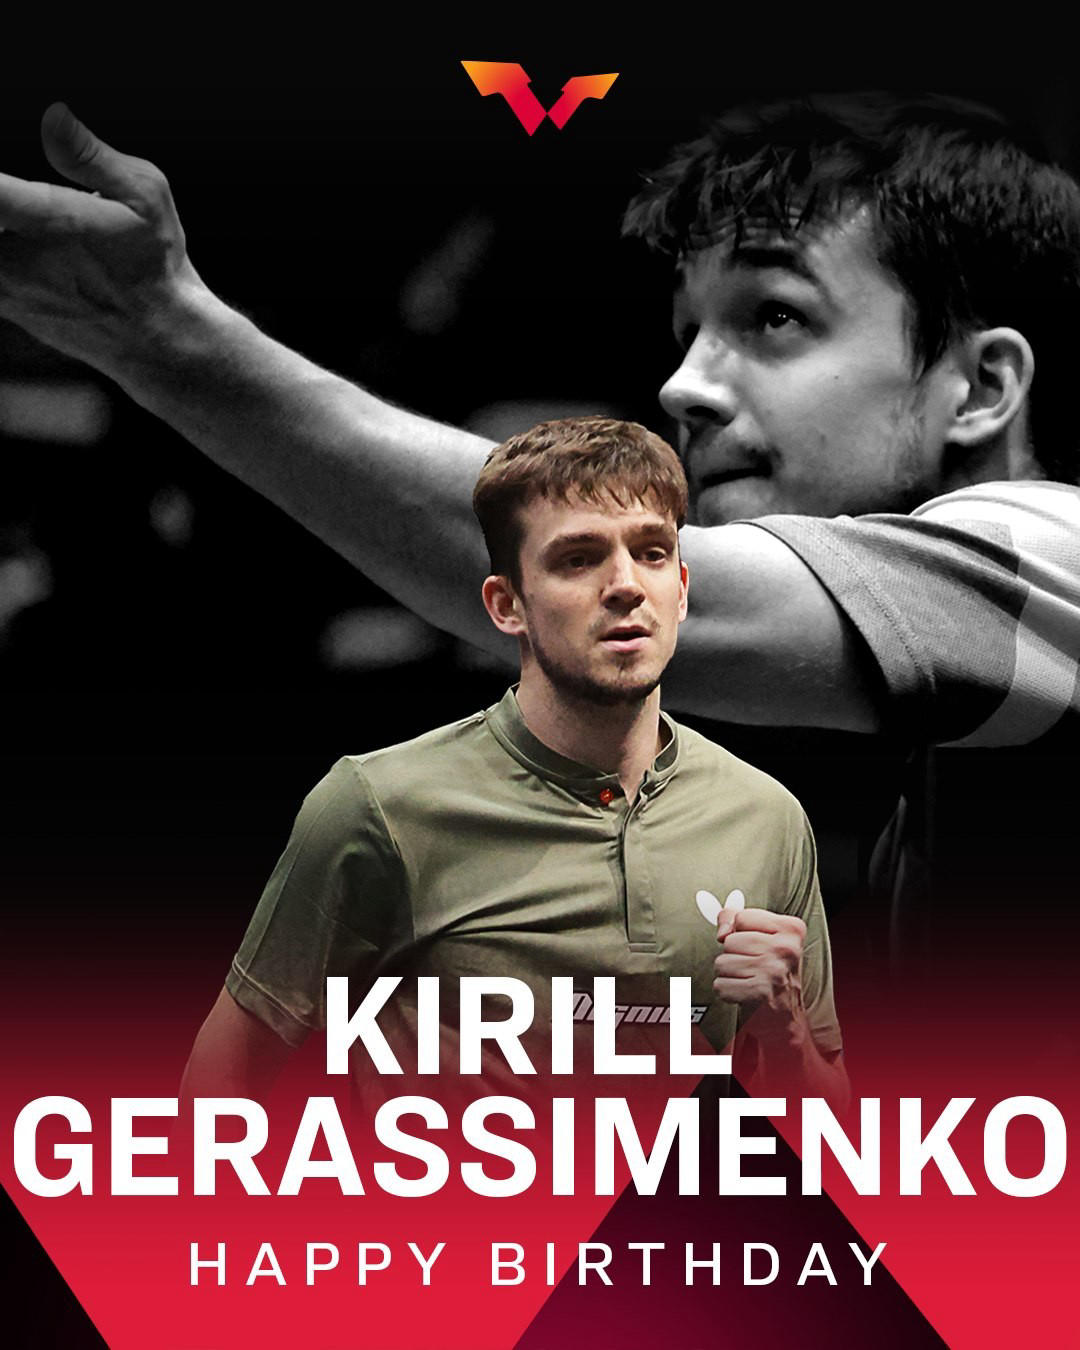 World Table Tennis - Happy birthday Kirill Gerassimenko